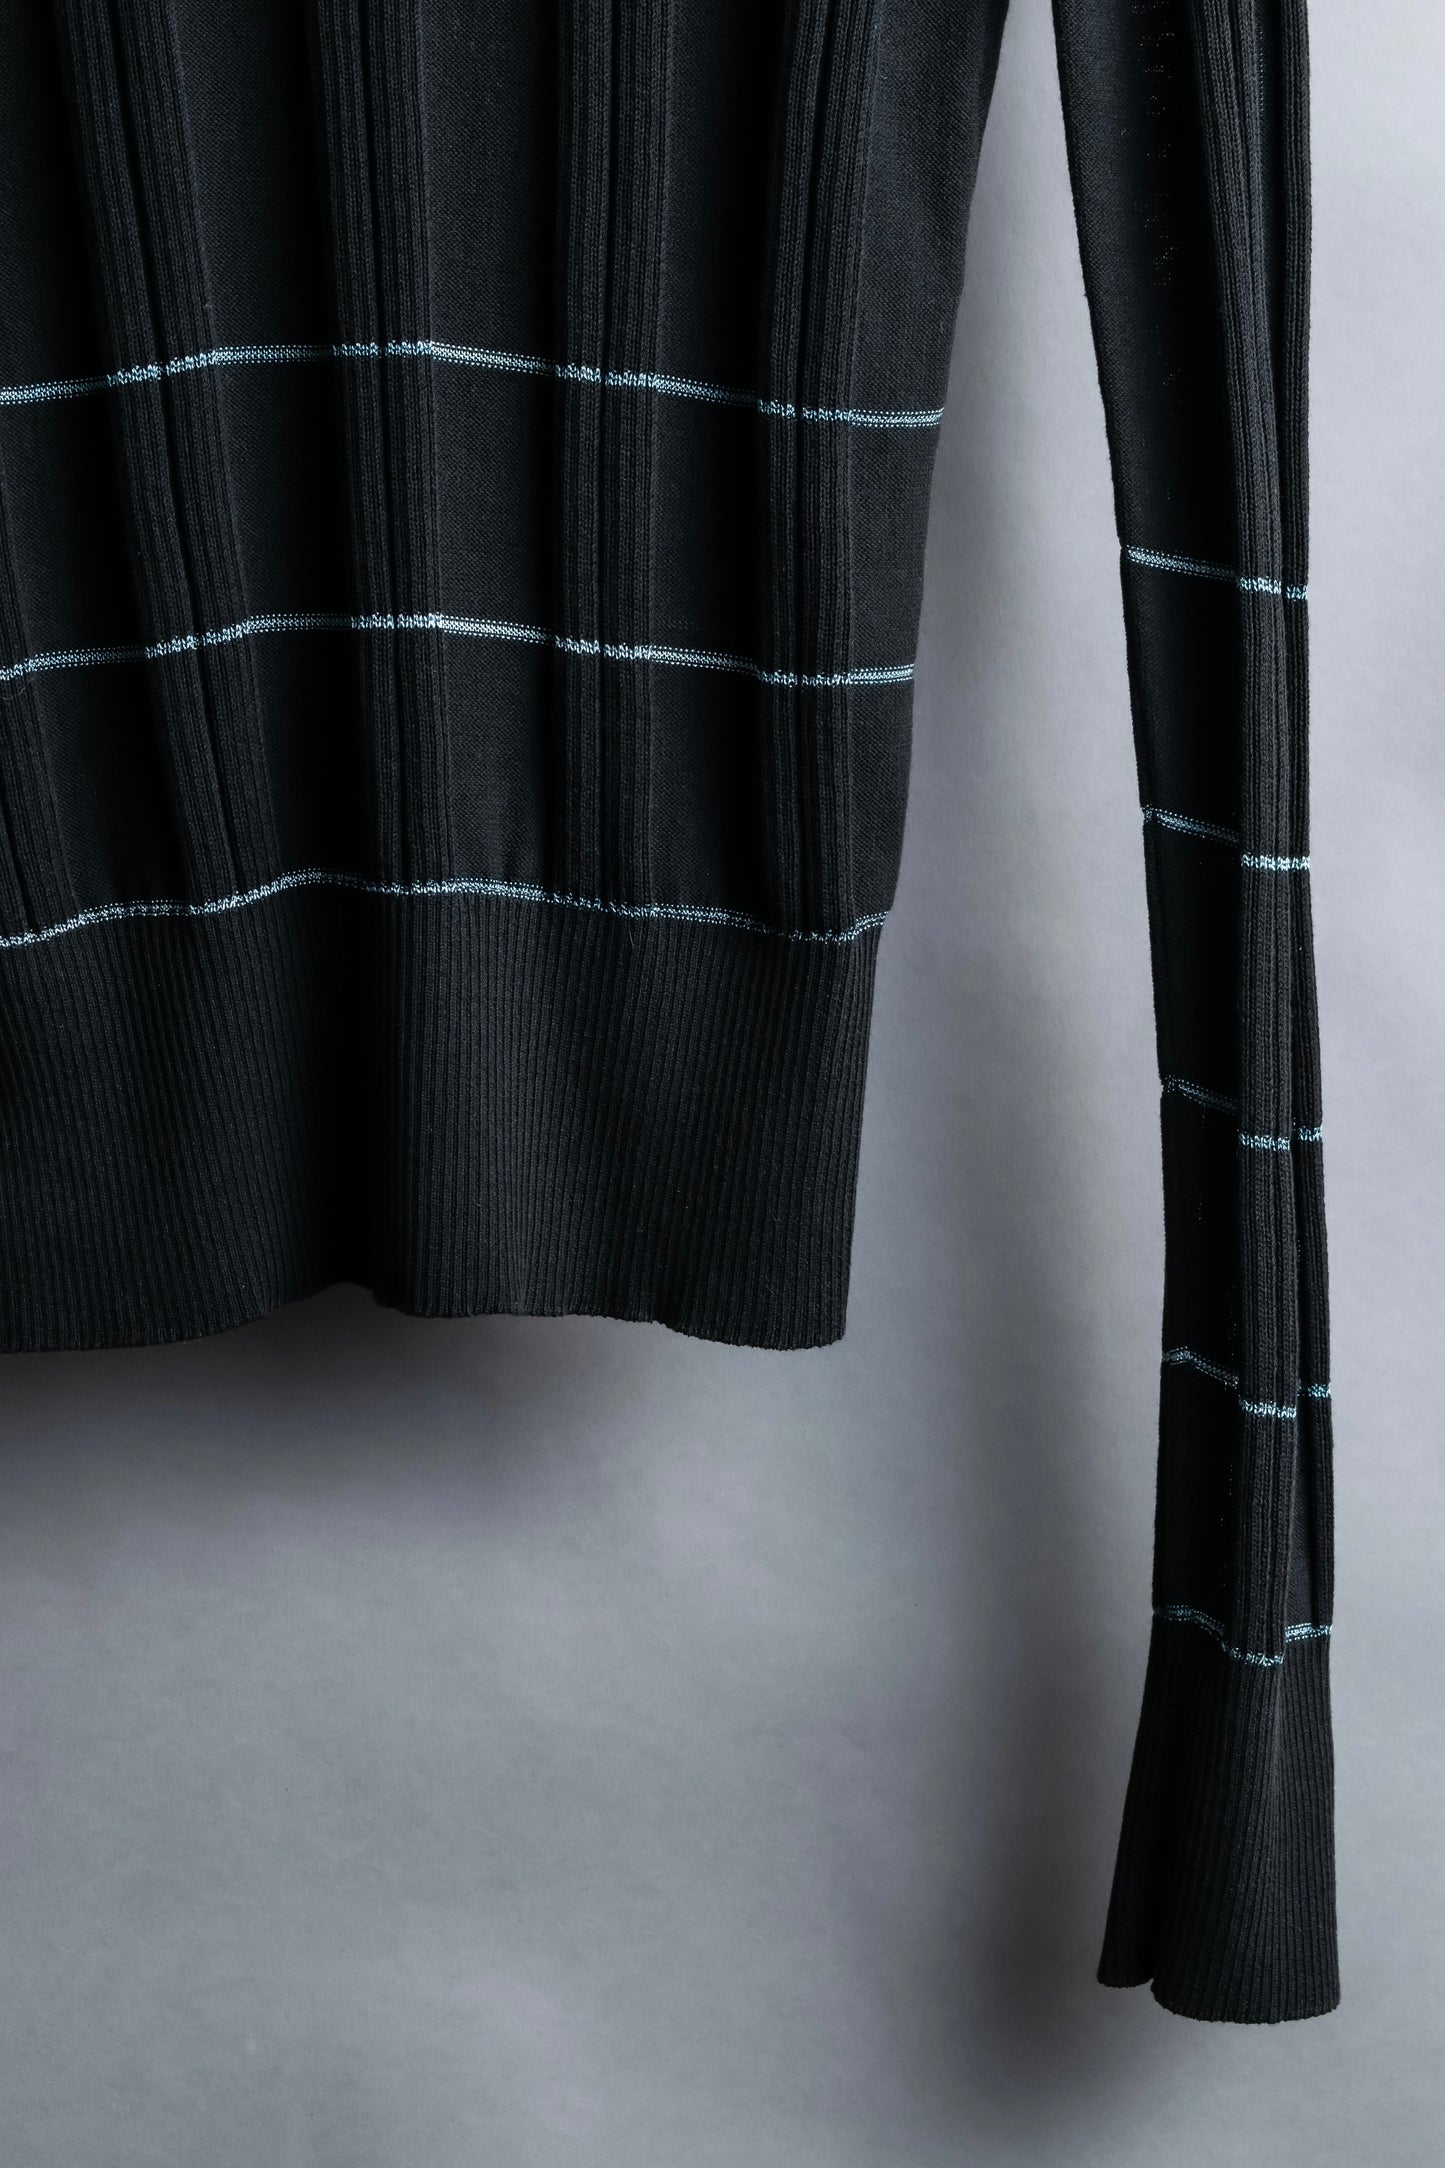 "CHANEL” Shirt layered border design knit